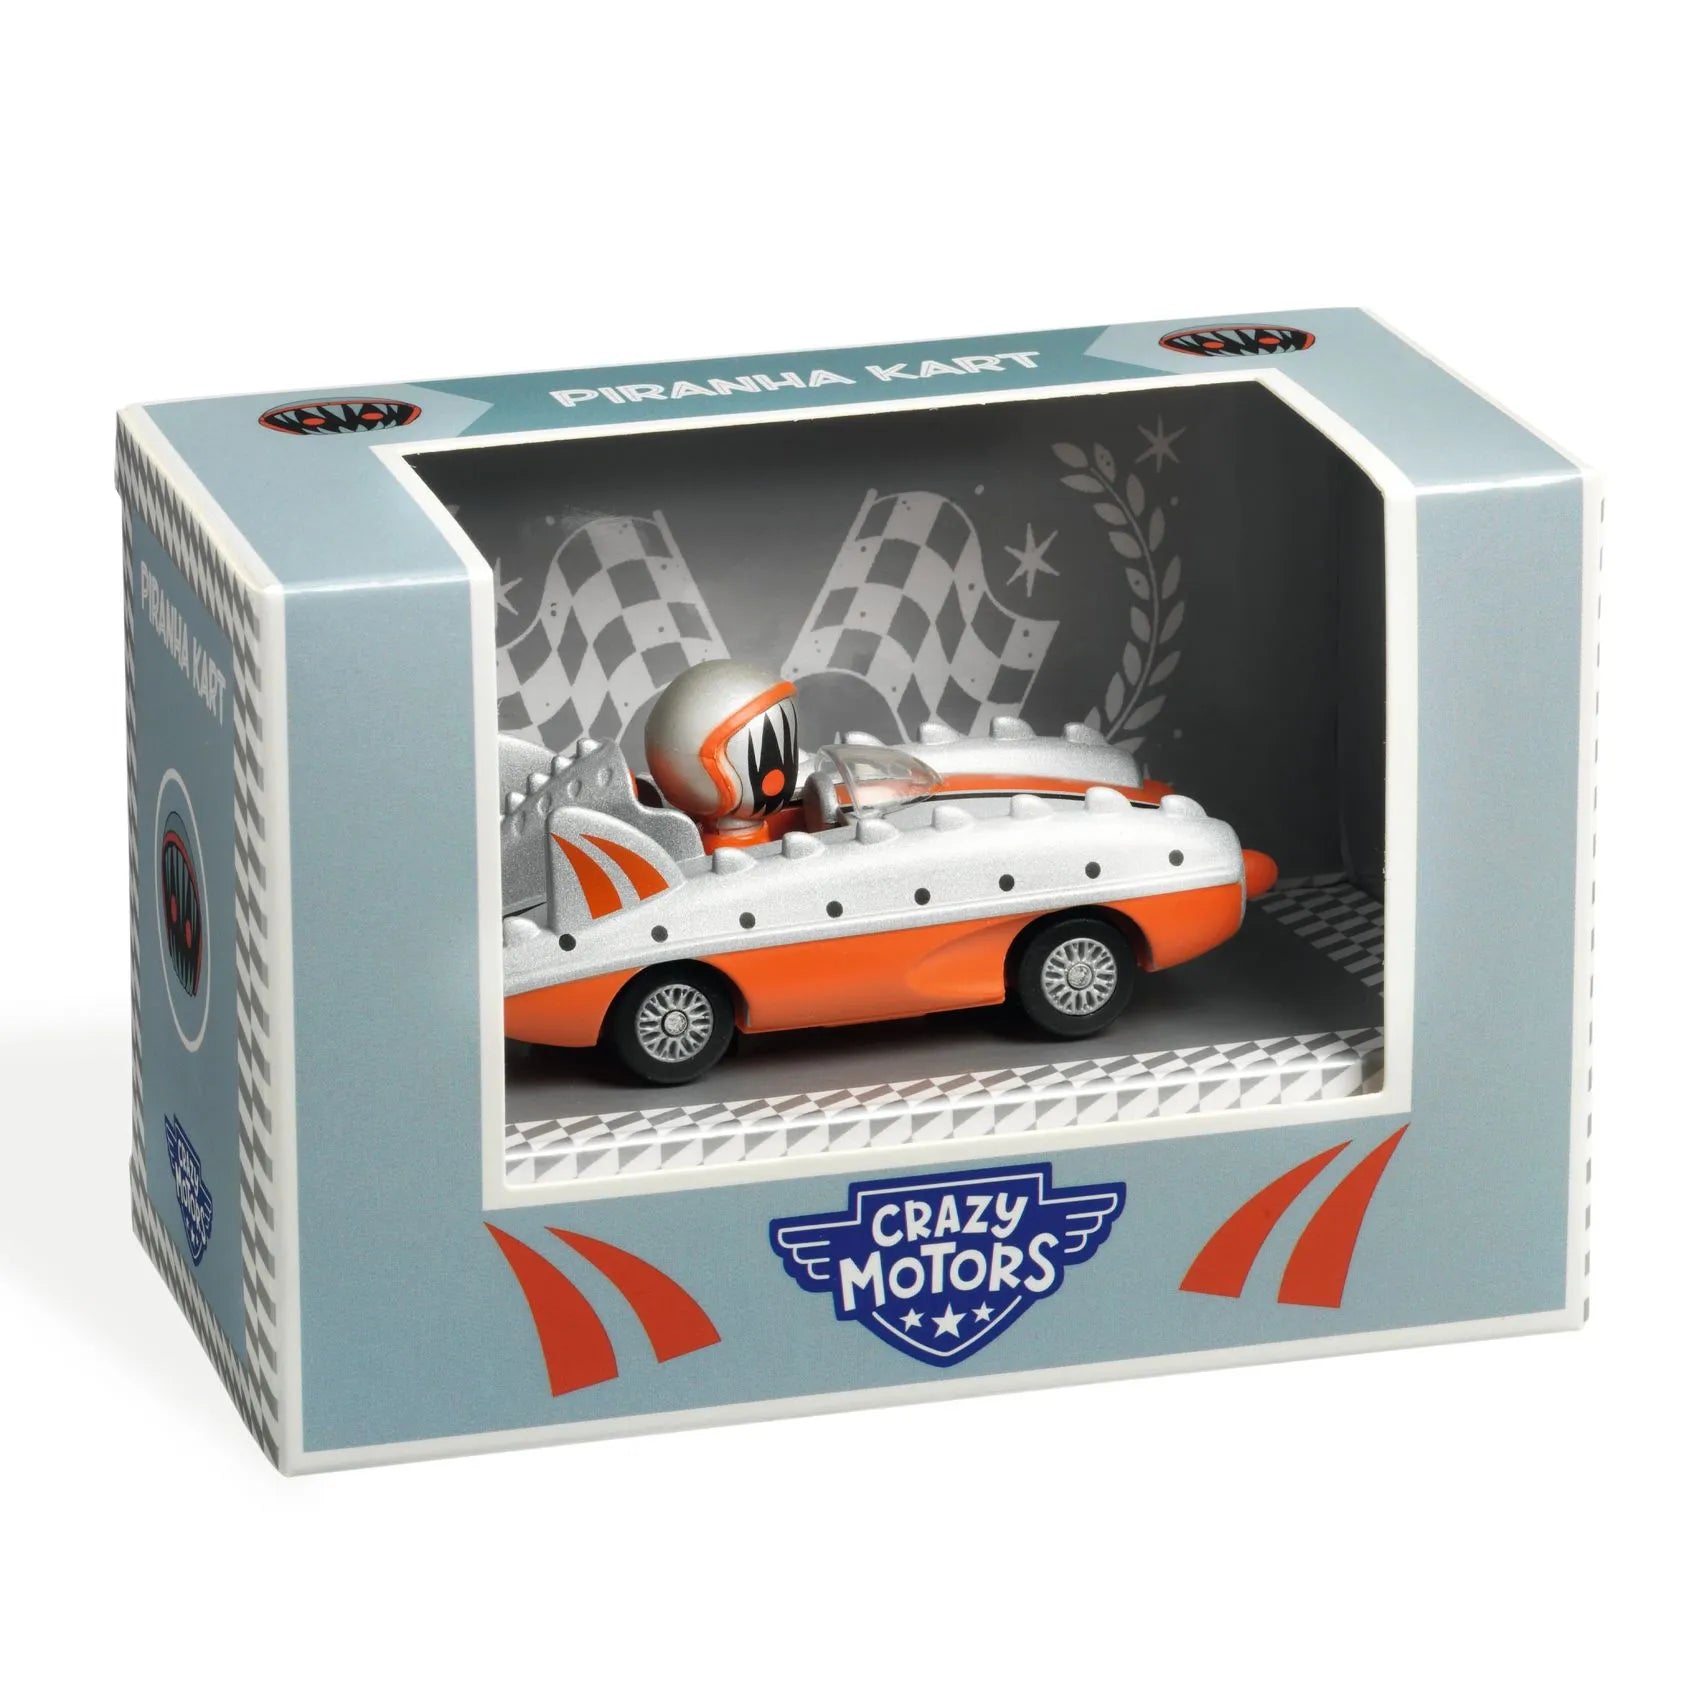 Djeco Crazy Motors Toy Car For Kids – Piranha Kart